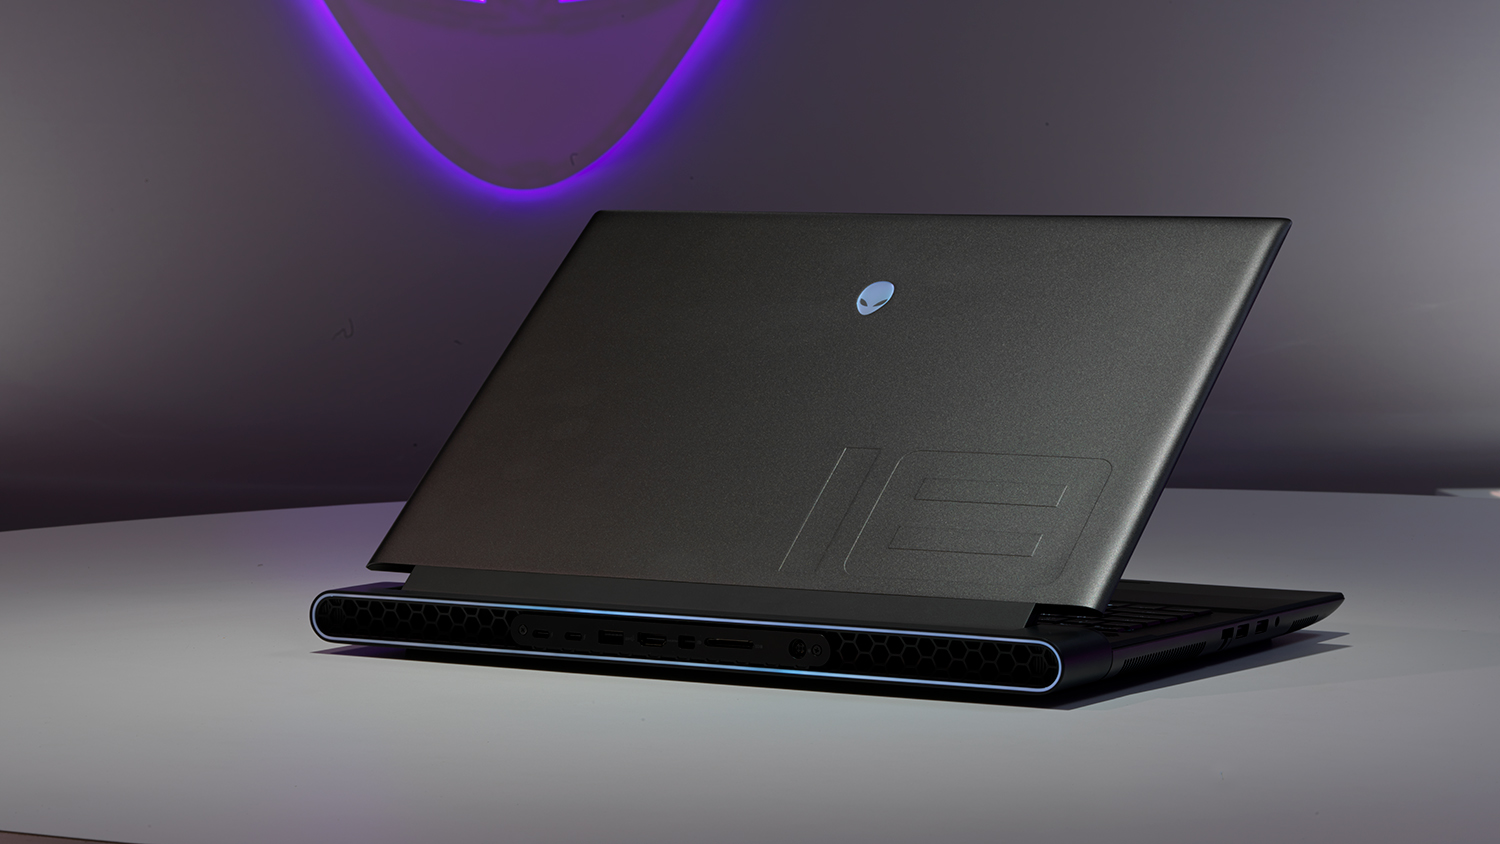 The Alienware m18 laptop sitting on a desk.